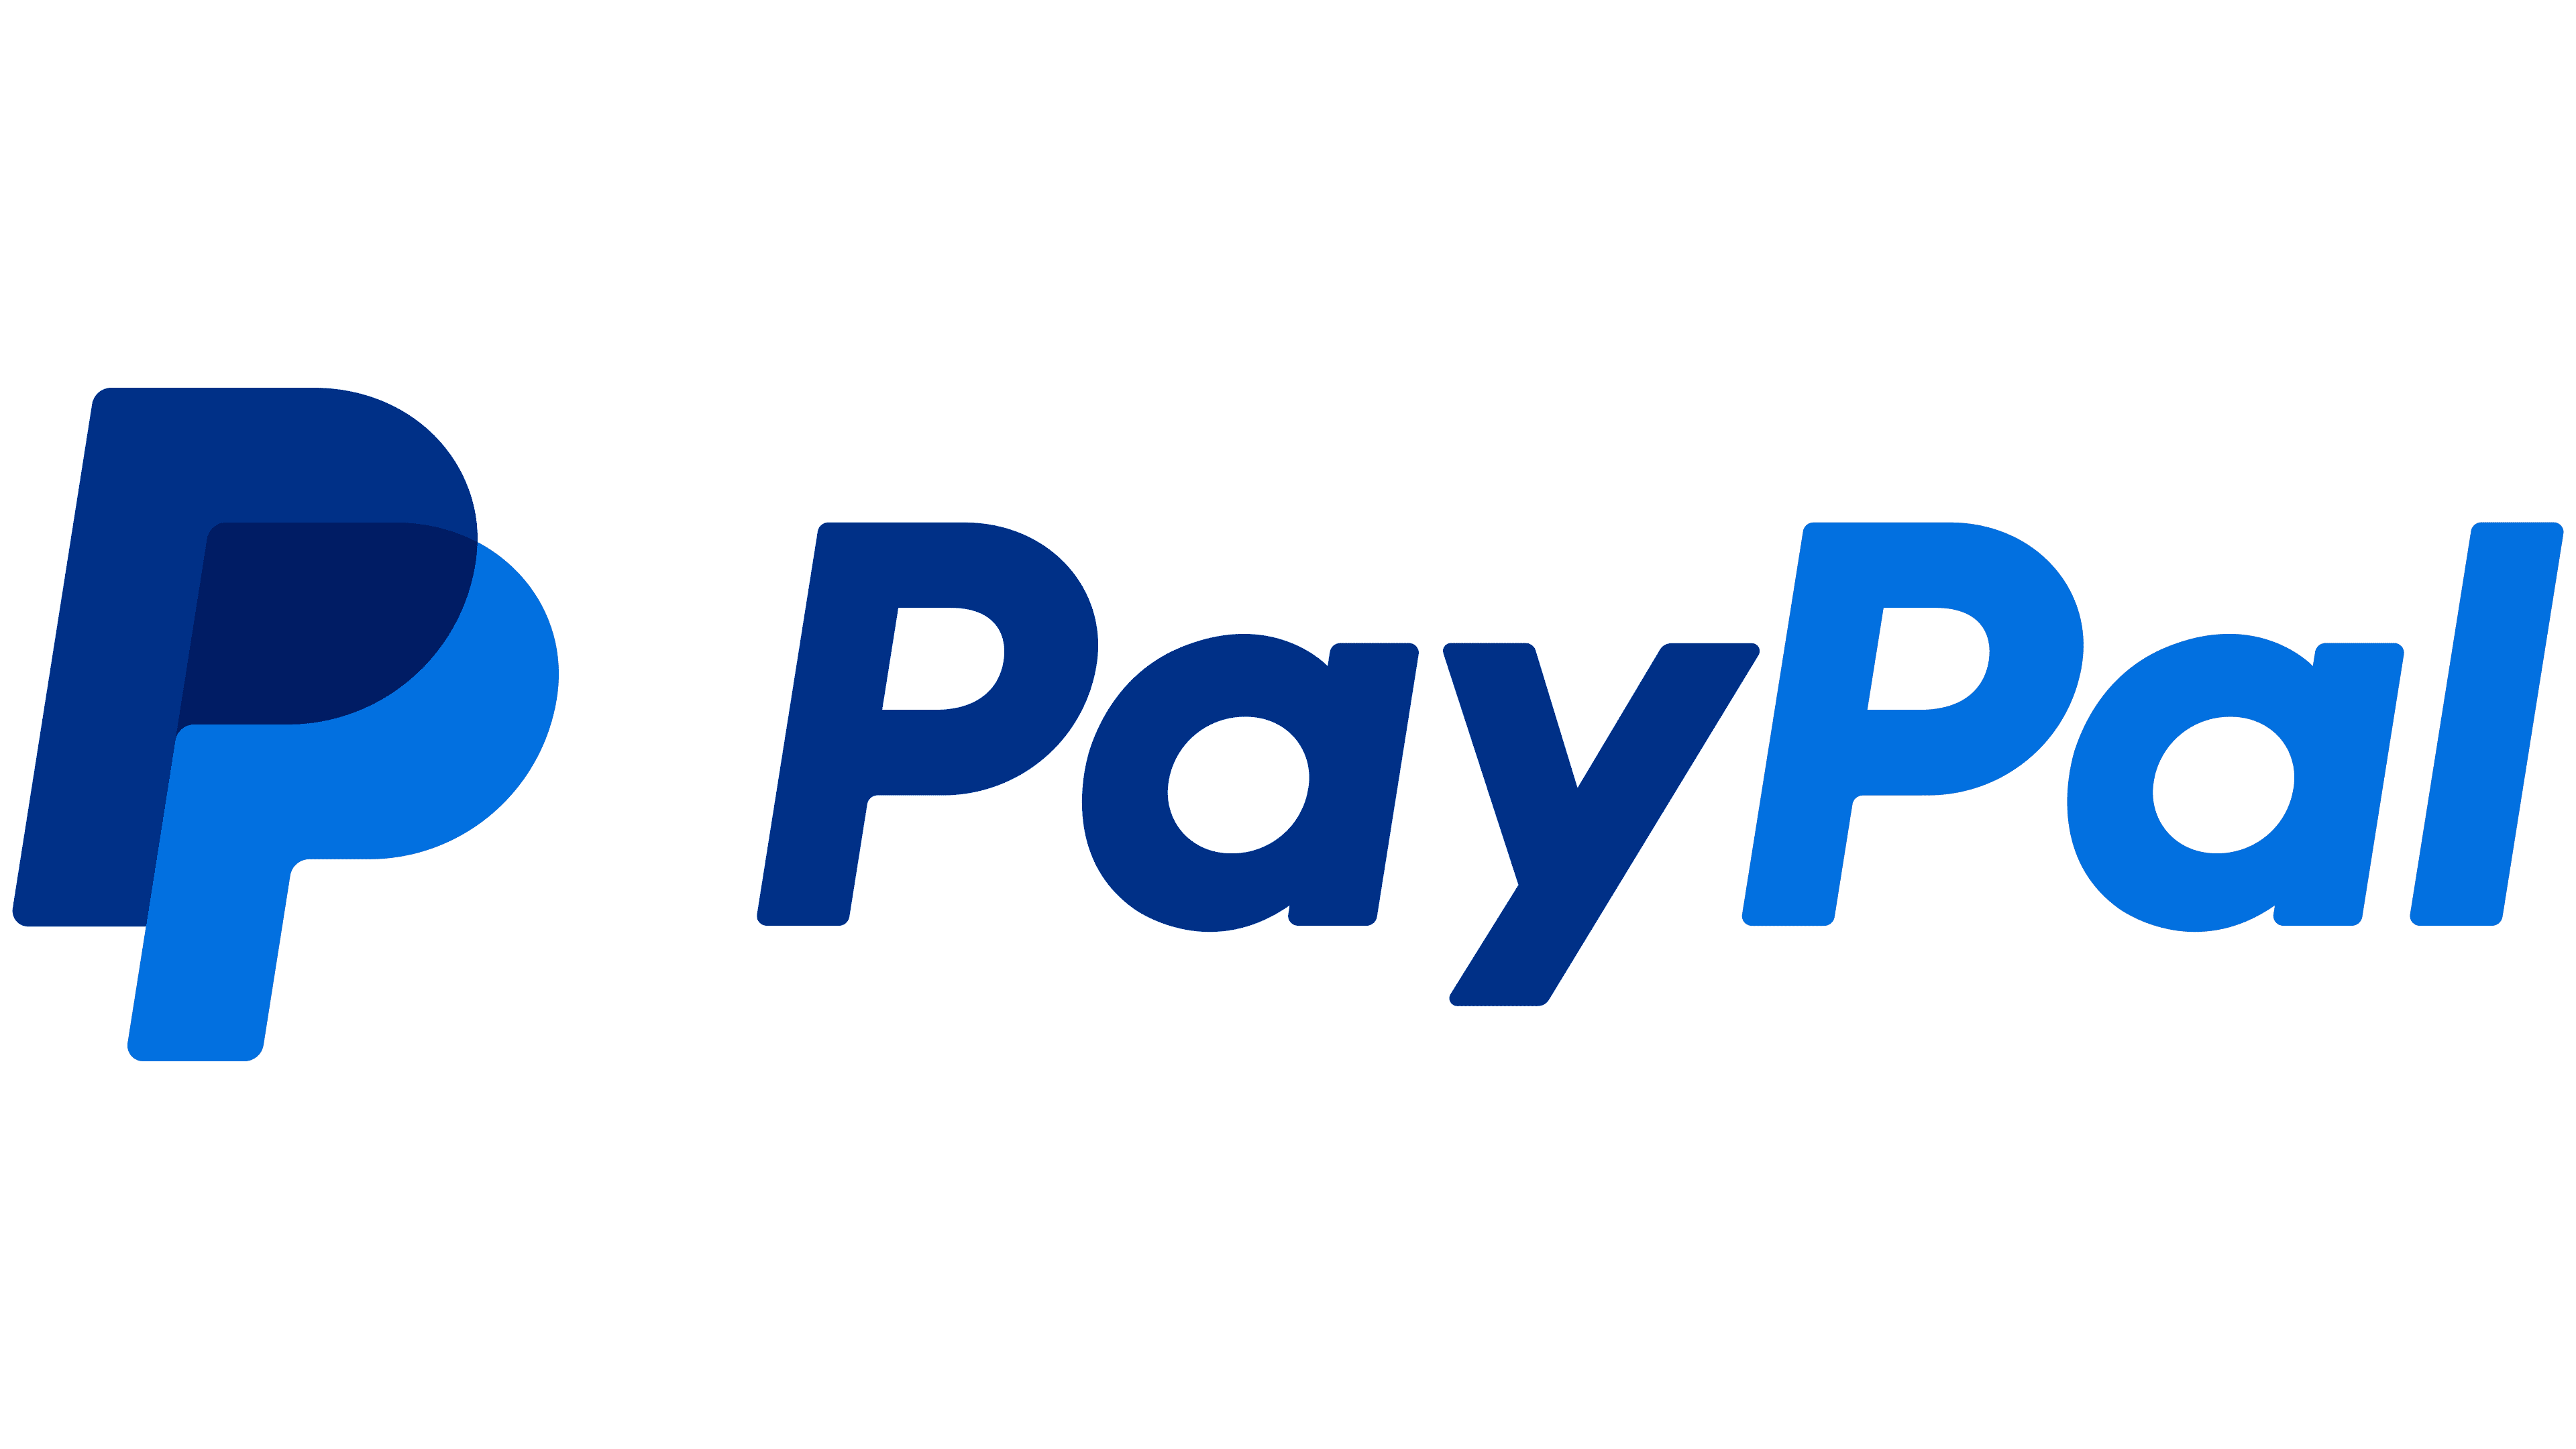 Payment gateways Spain (PayPal)